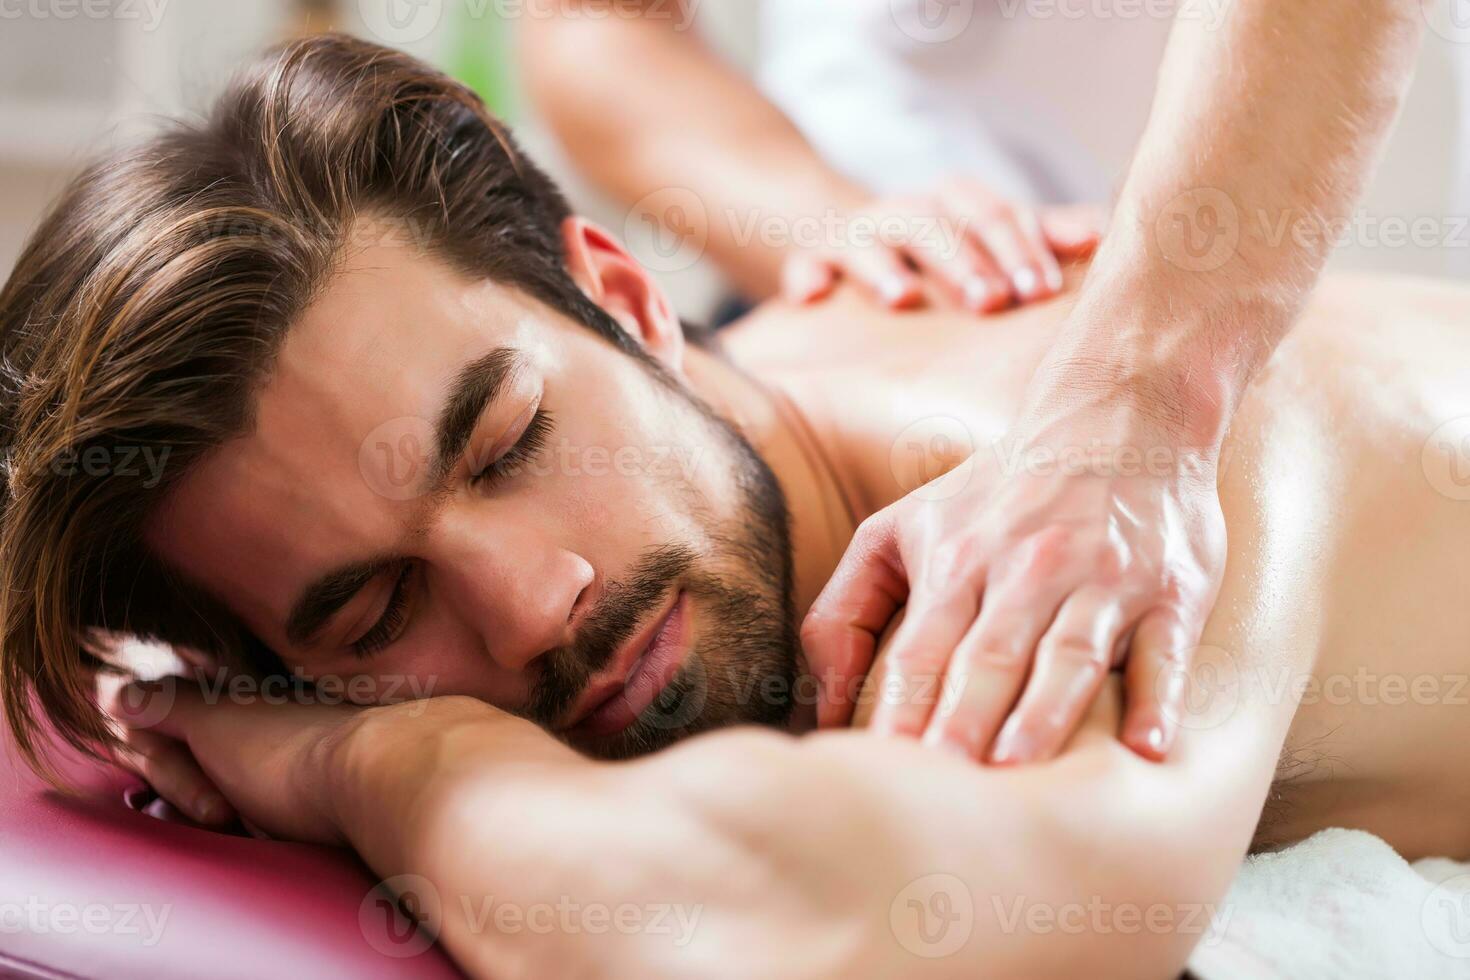 A man getting a back massage photo